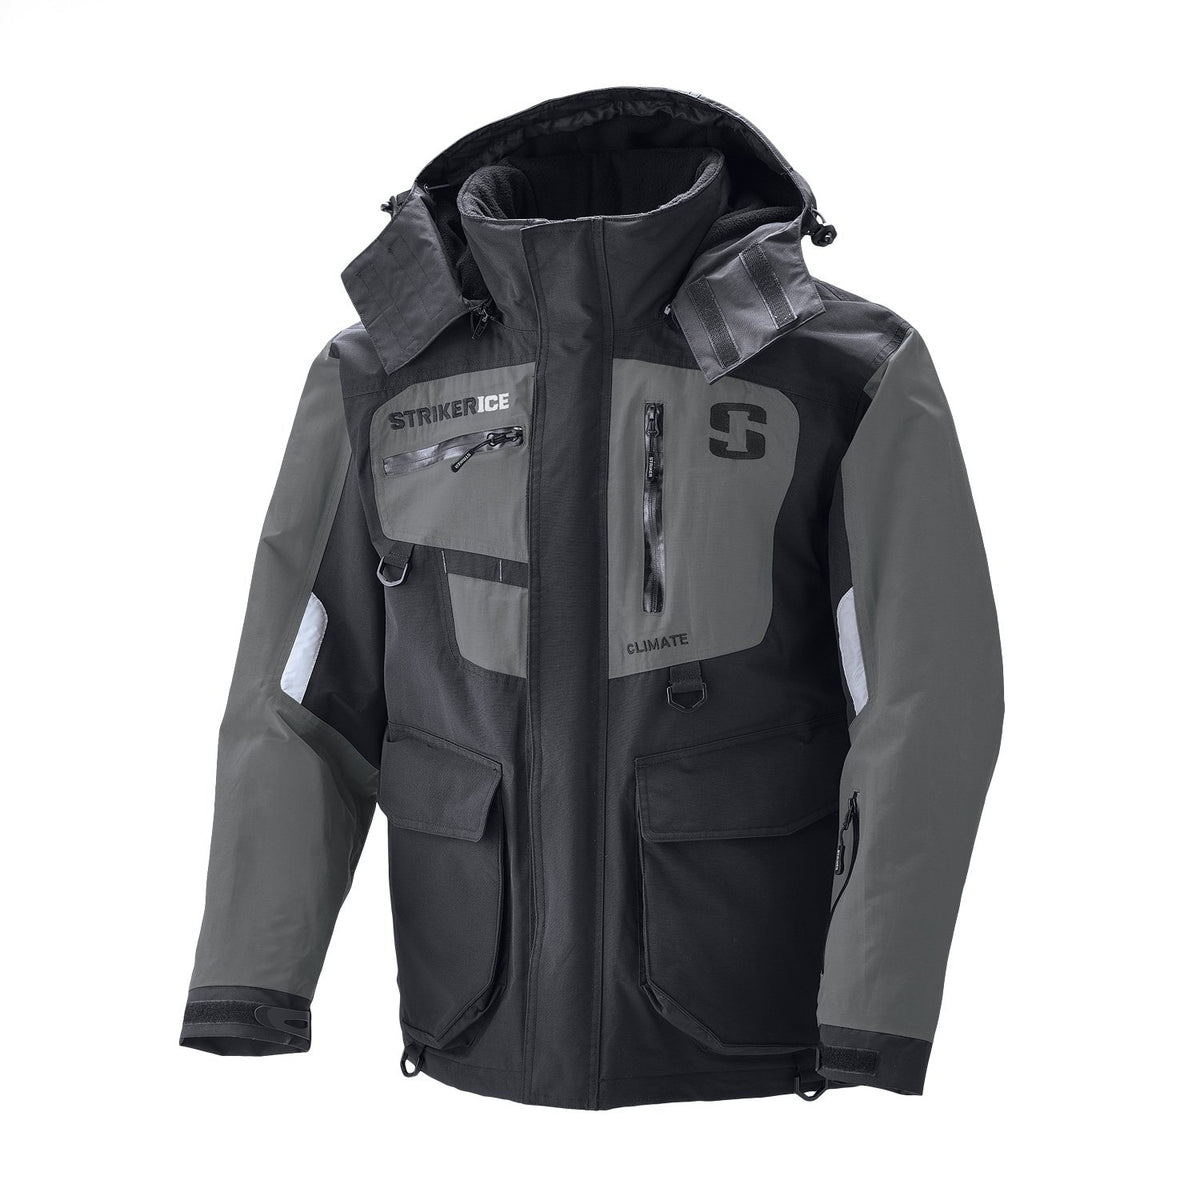 Striker Ice Climate Jacket - Black/Gray - Side